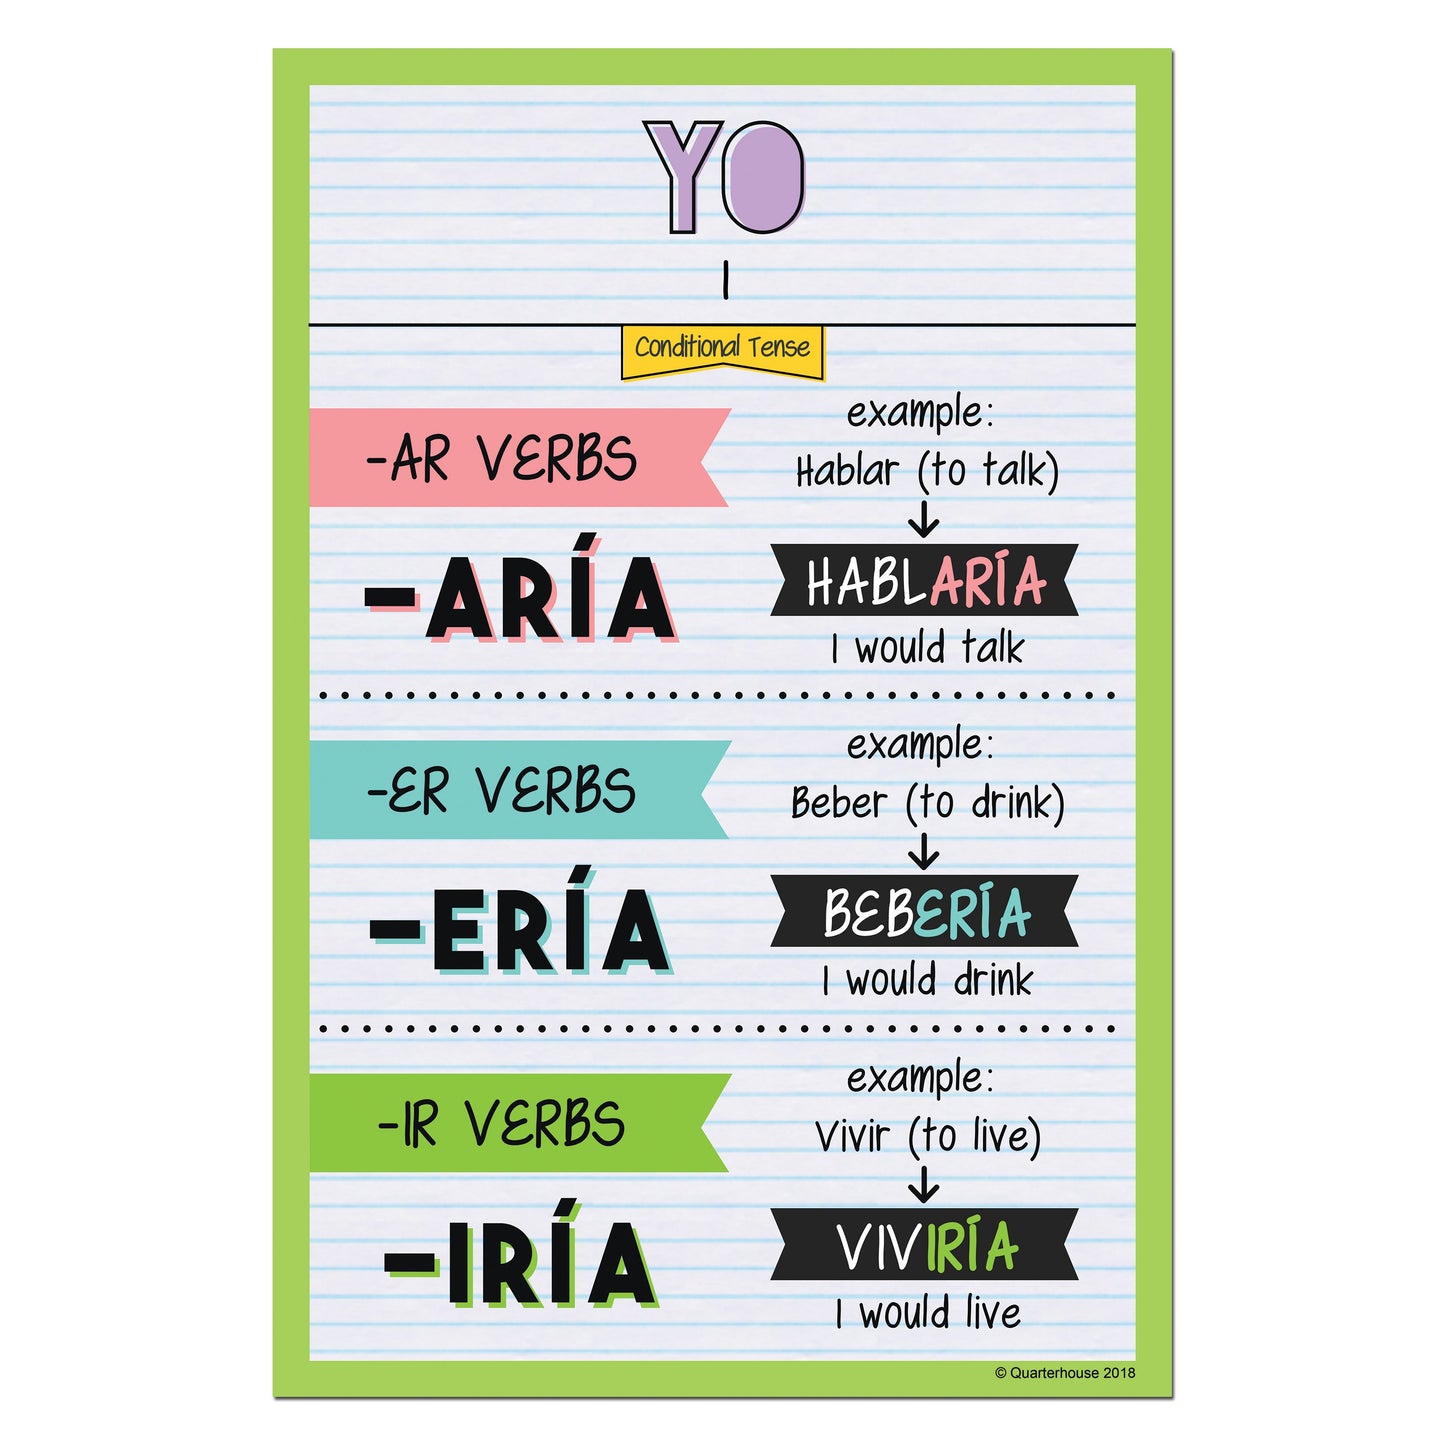 Quarterhouse Yo - Conditional Tense Spanish Verb Conjugation Poster, Spanish and ESL Classroom Materials for Teachers